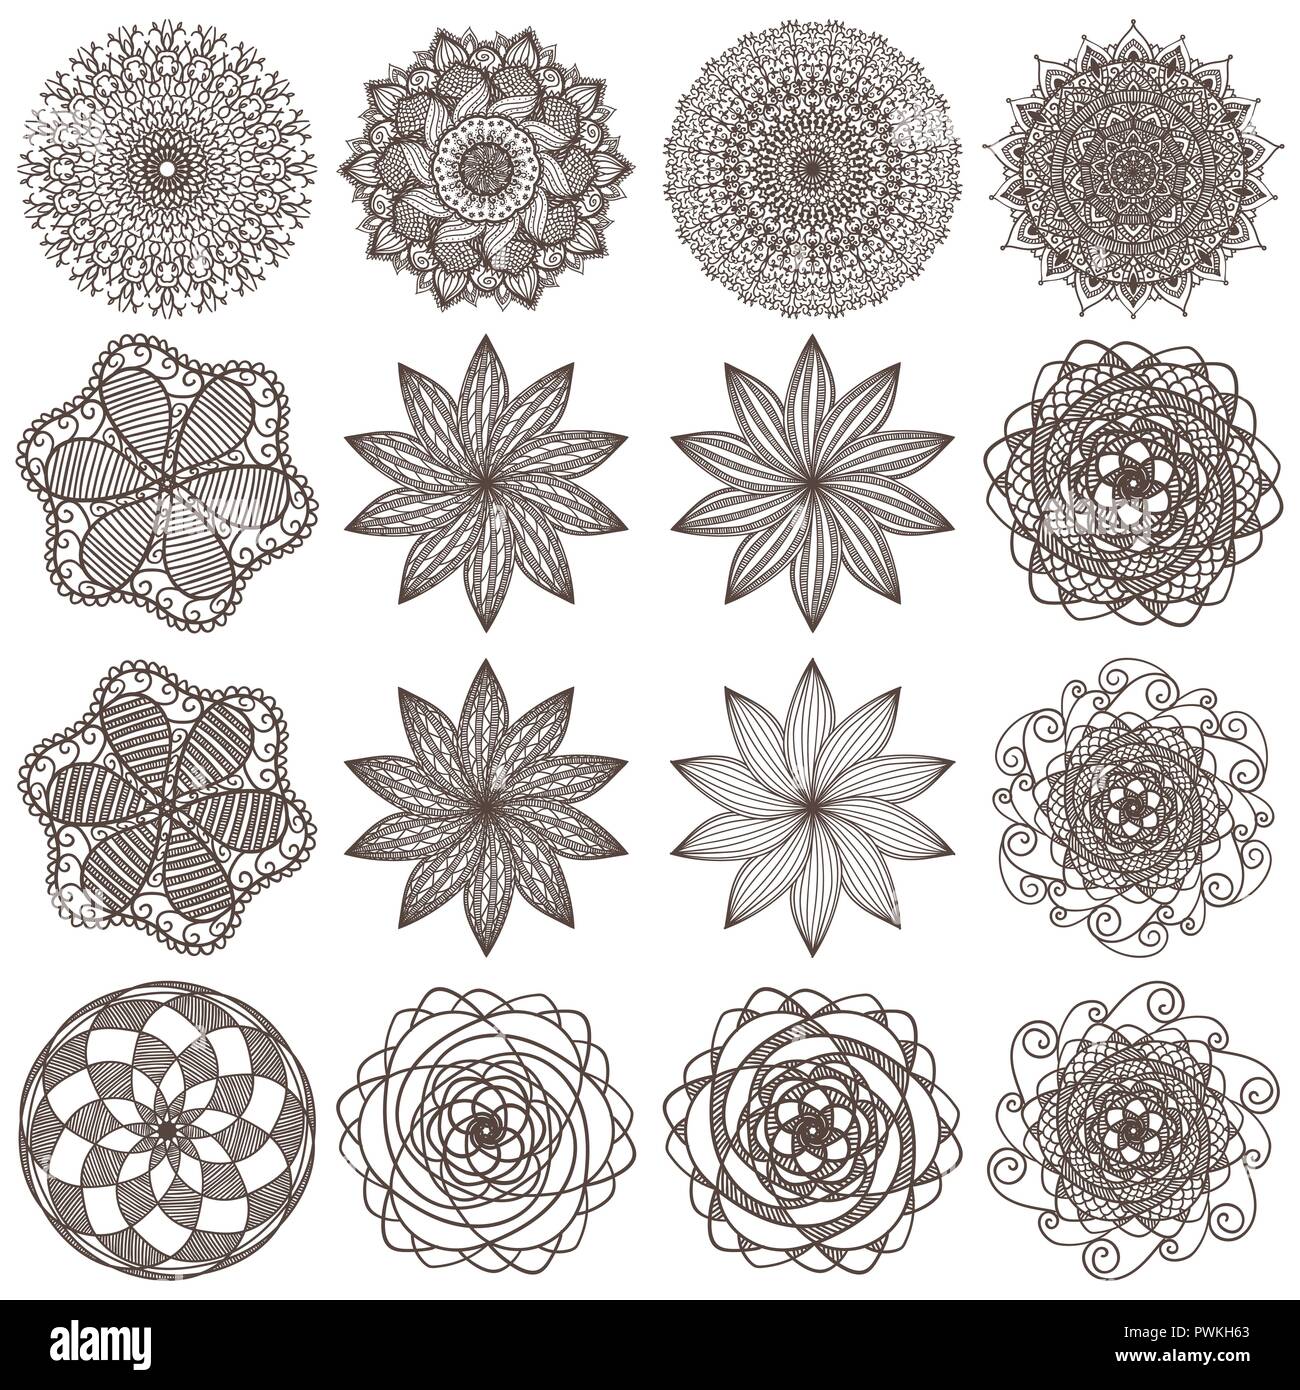 Mandala tattoo design sacred geometry4 by TattooDesigns4u on DeviantArt